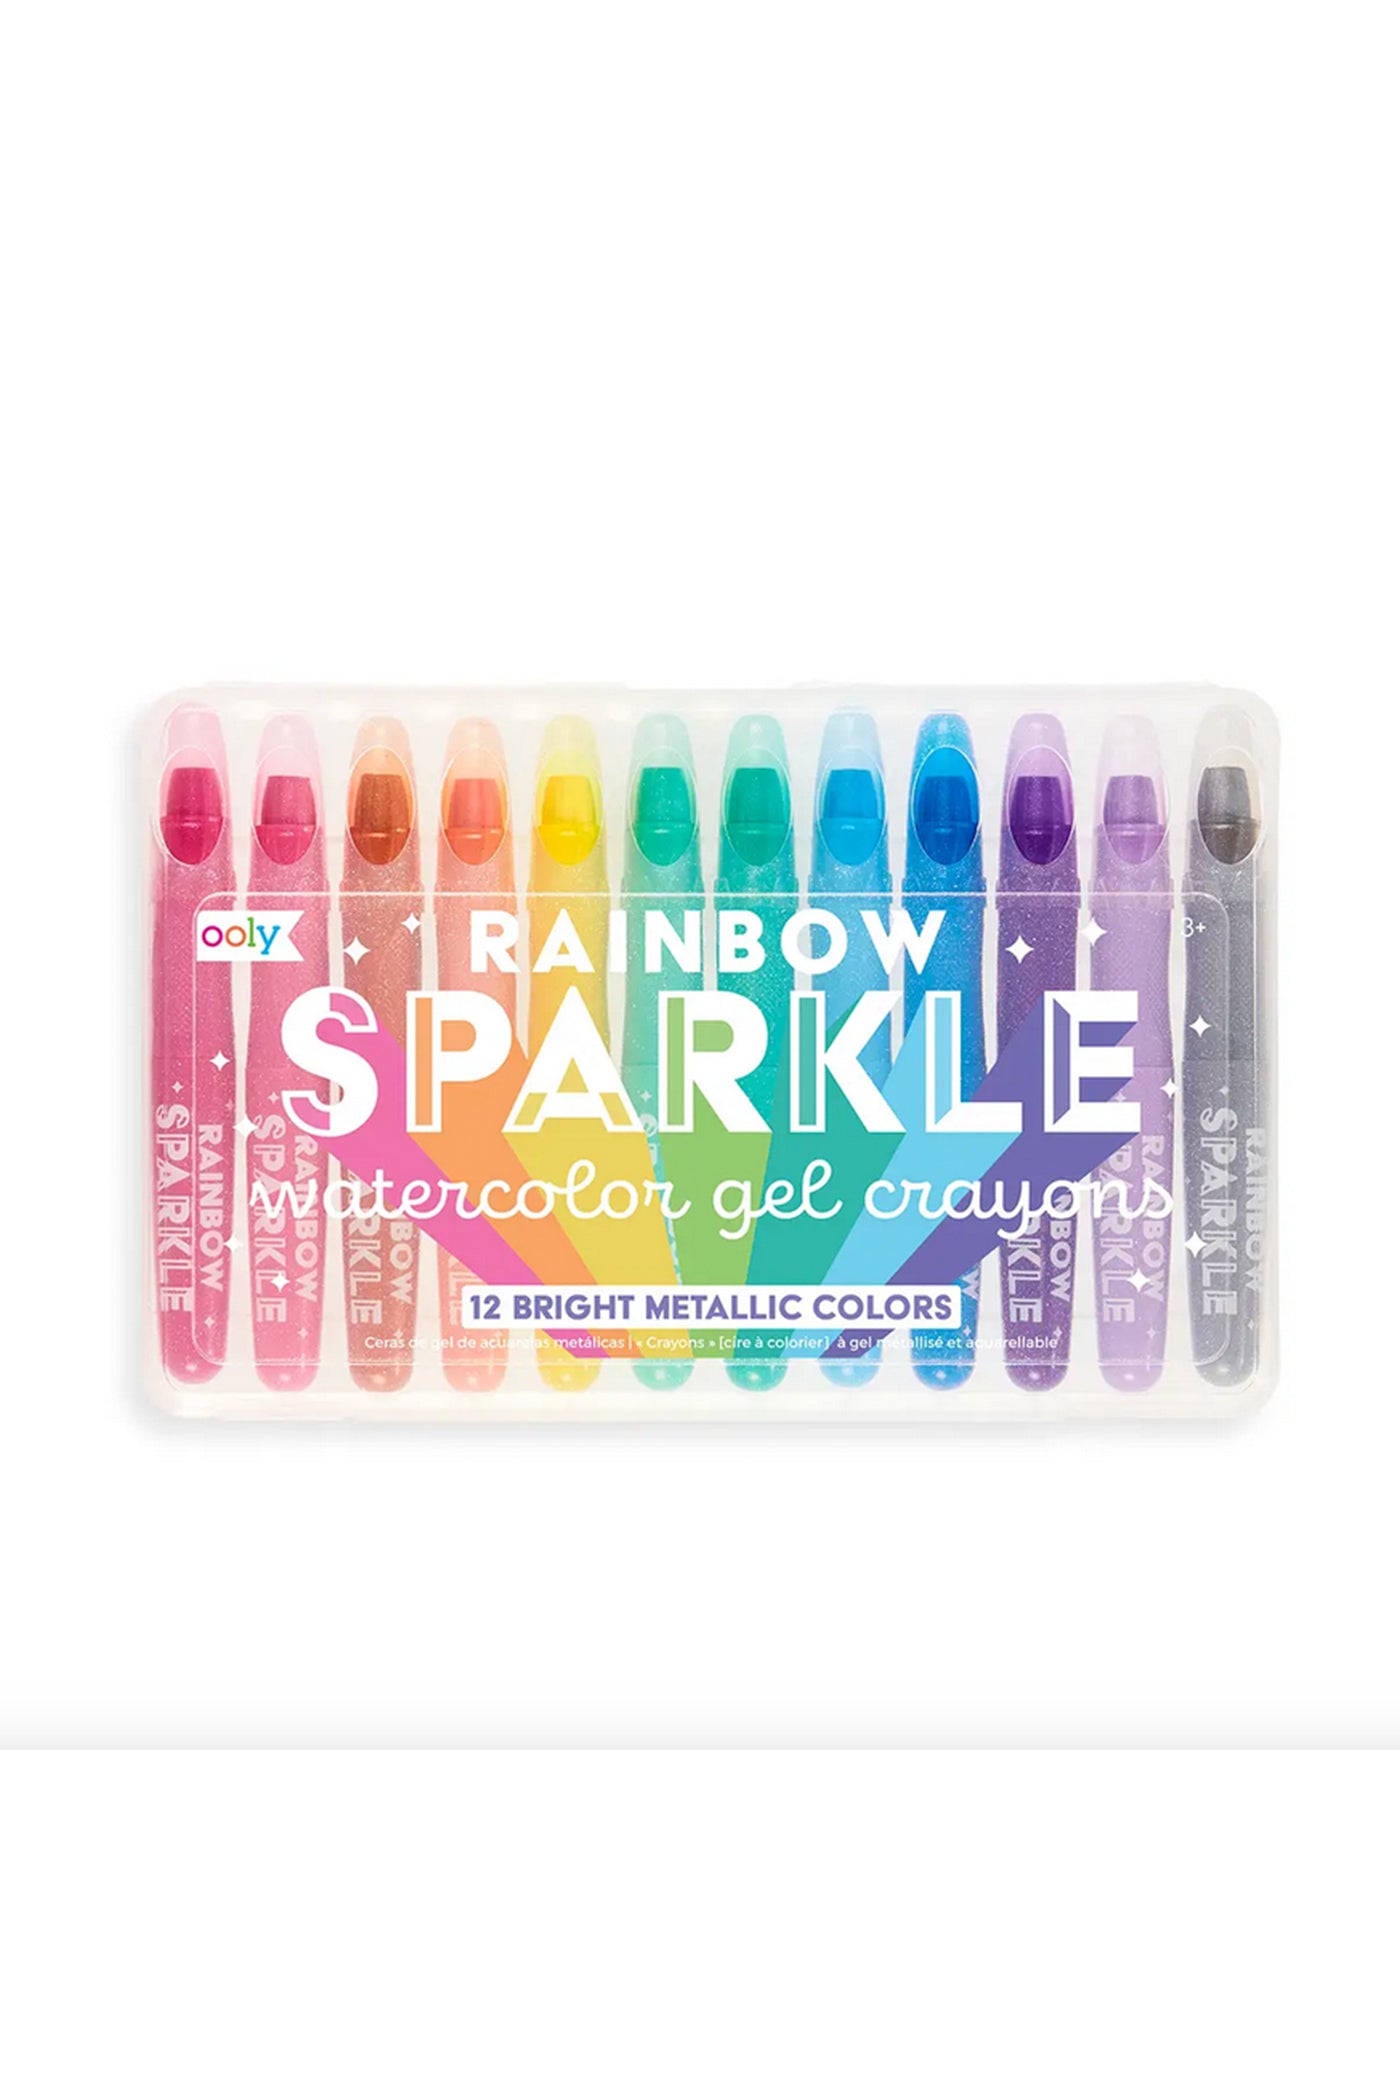 Rainbow Sparkle Metallic Gel Crayons by Nectar Kids